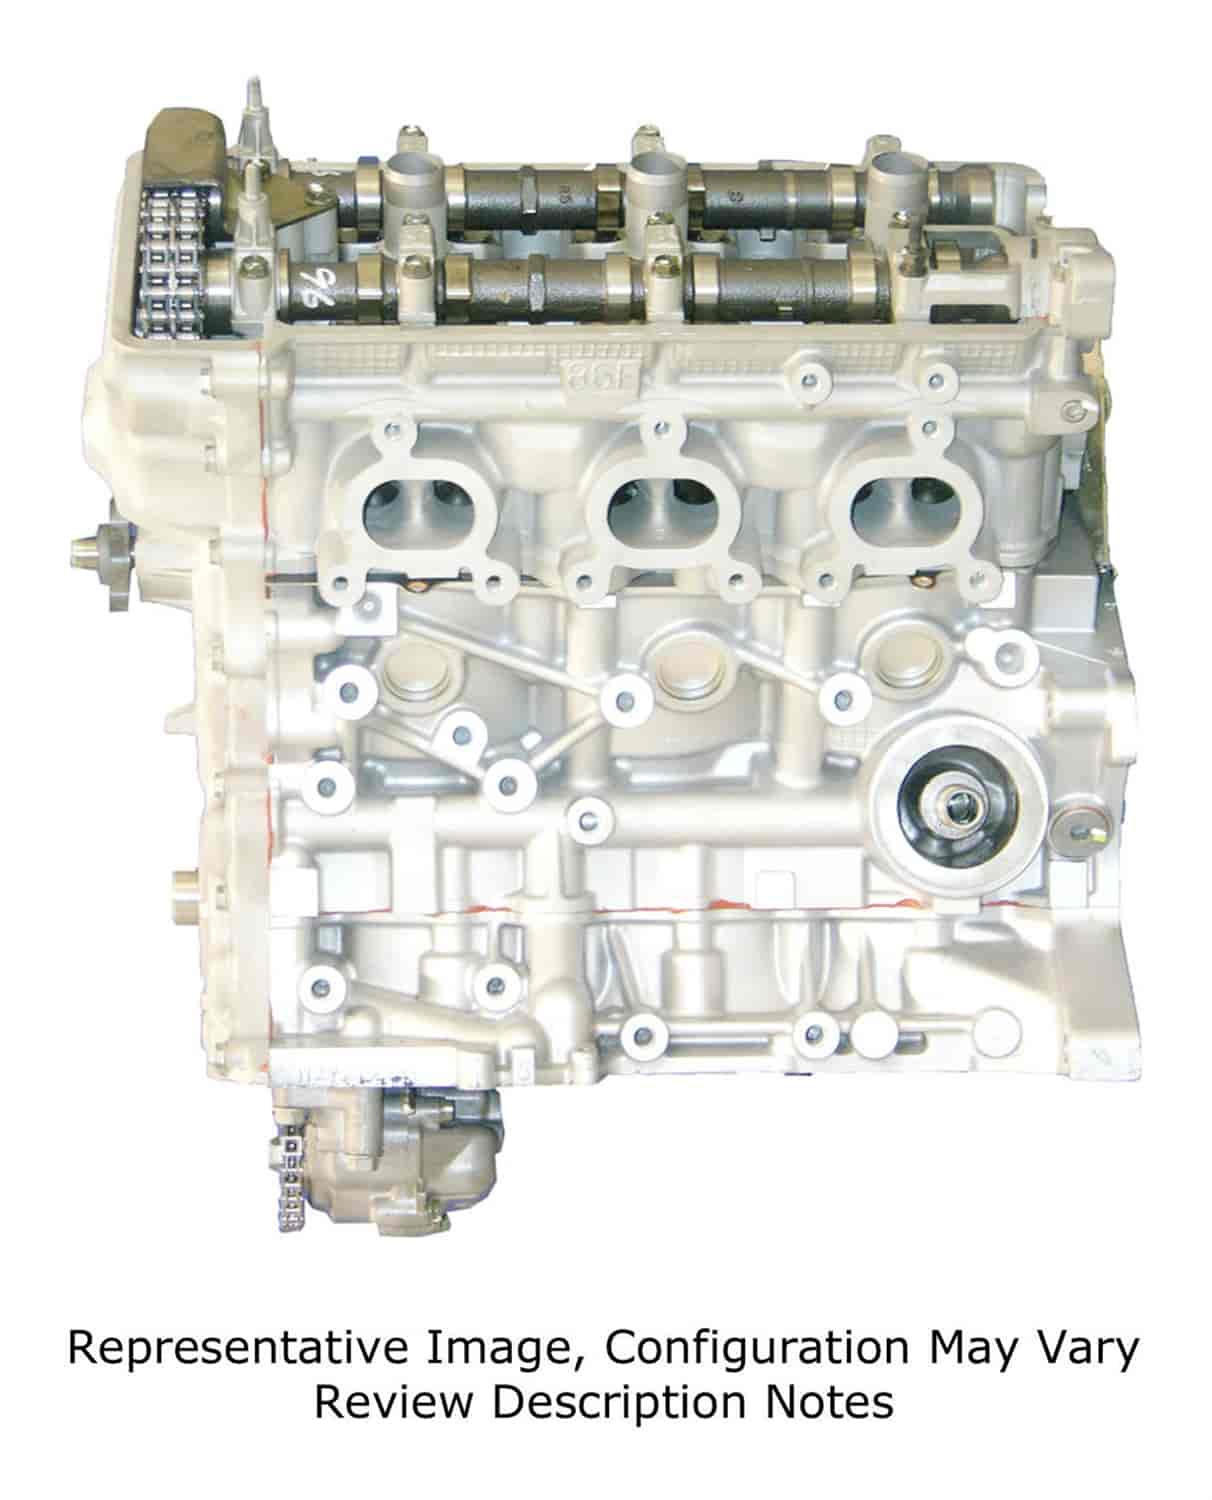 Remanufactured Crate Engine for 2006-2008 Suzuki Grand Vitara with 2.7L V6